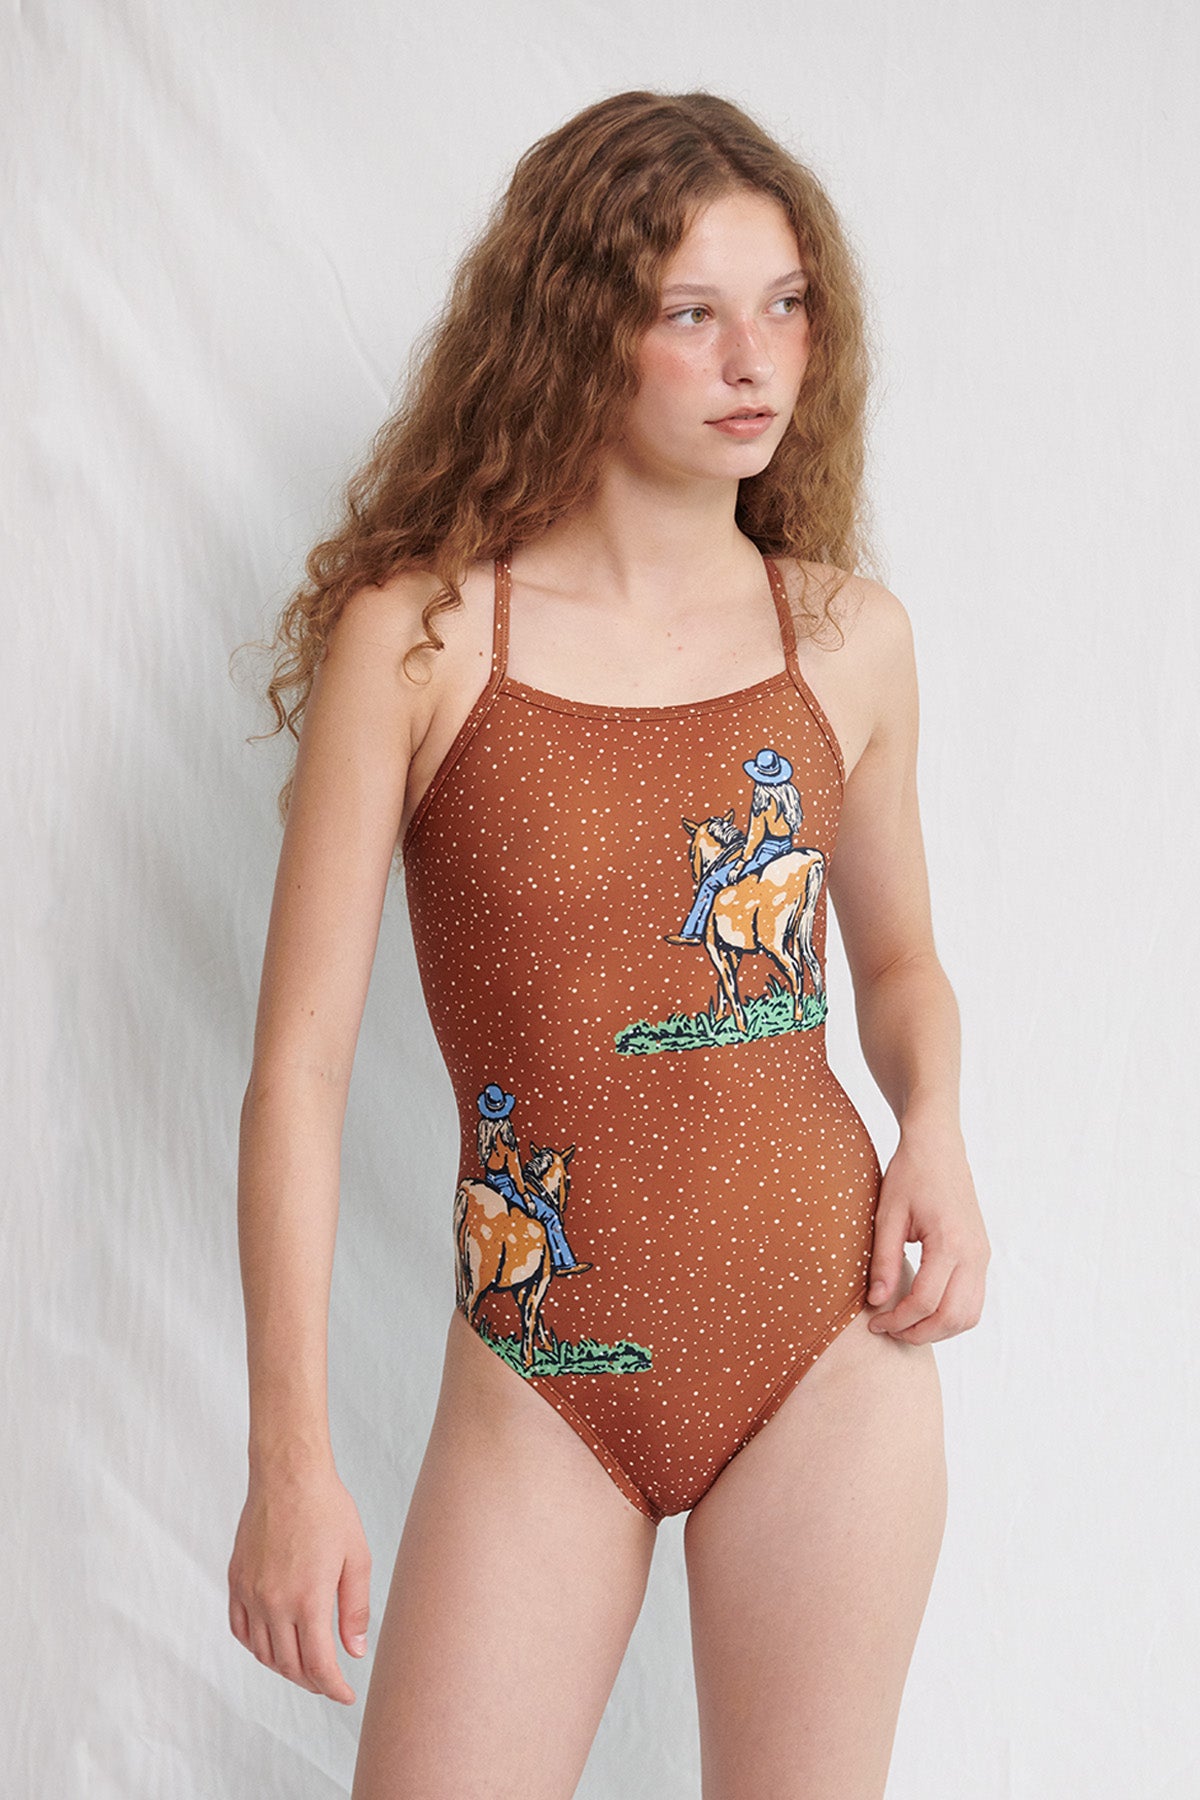 Wild Dreamer Swimsuit - Caramel Brown